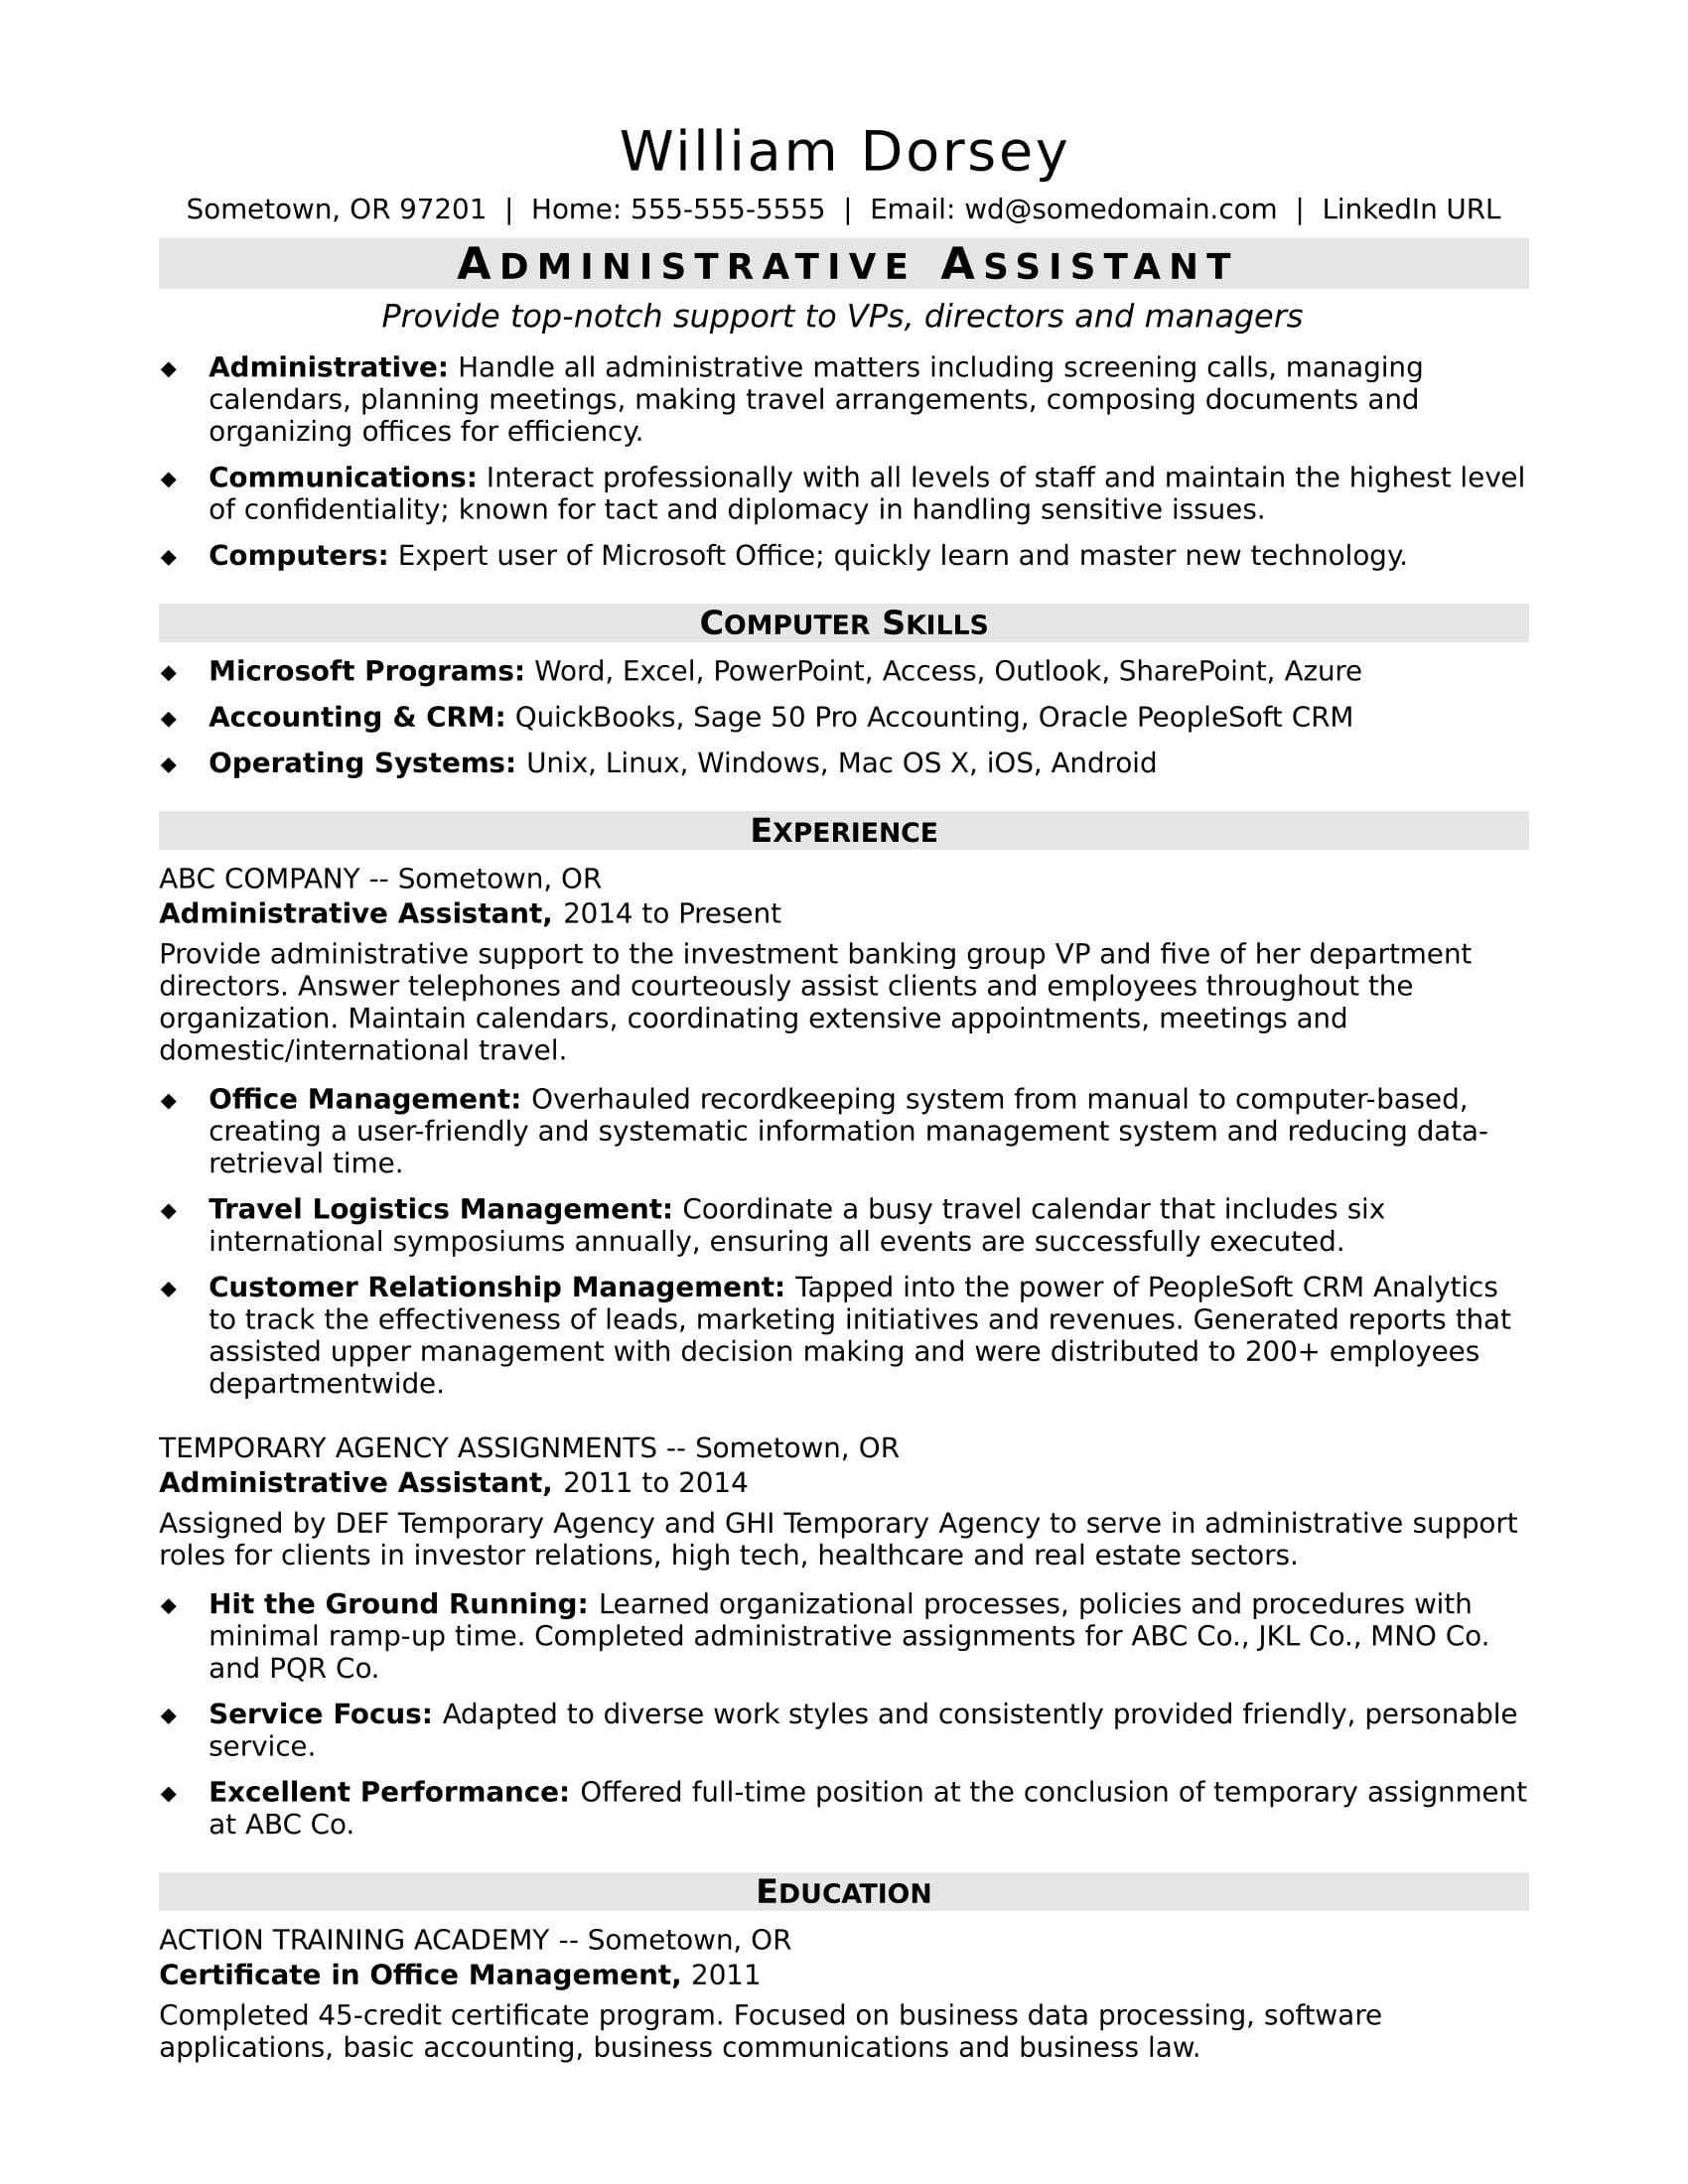 Sample Resume Administrative assistant Real Estate Office Administrative assistant Resume Sample Monster.com